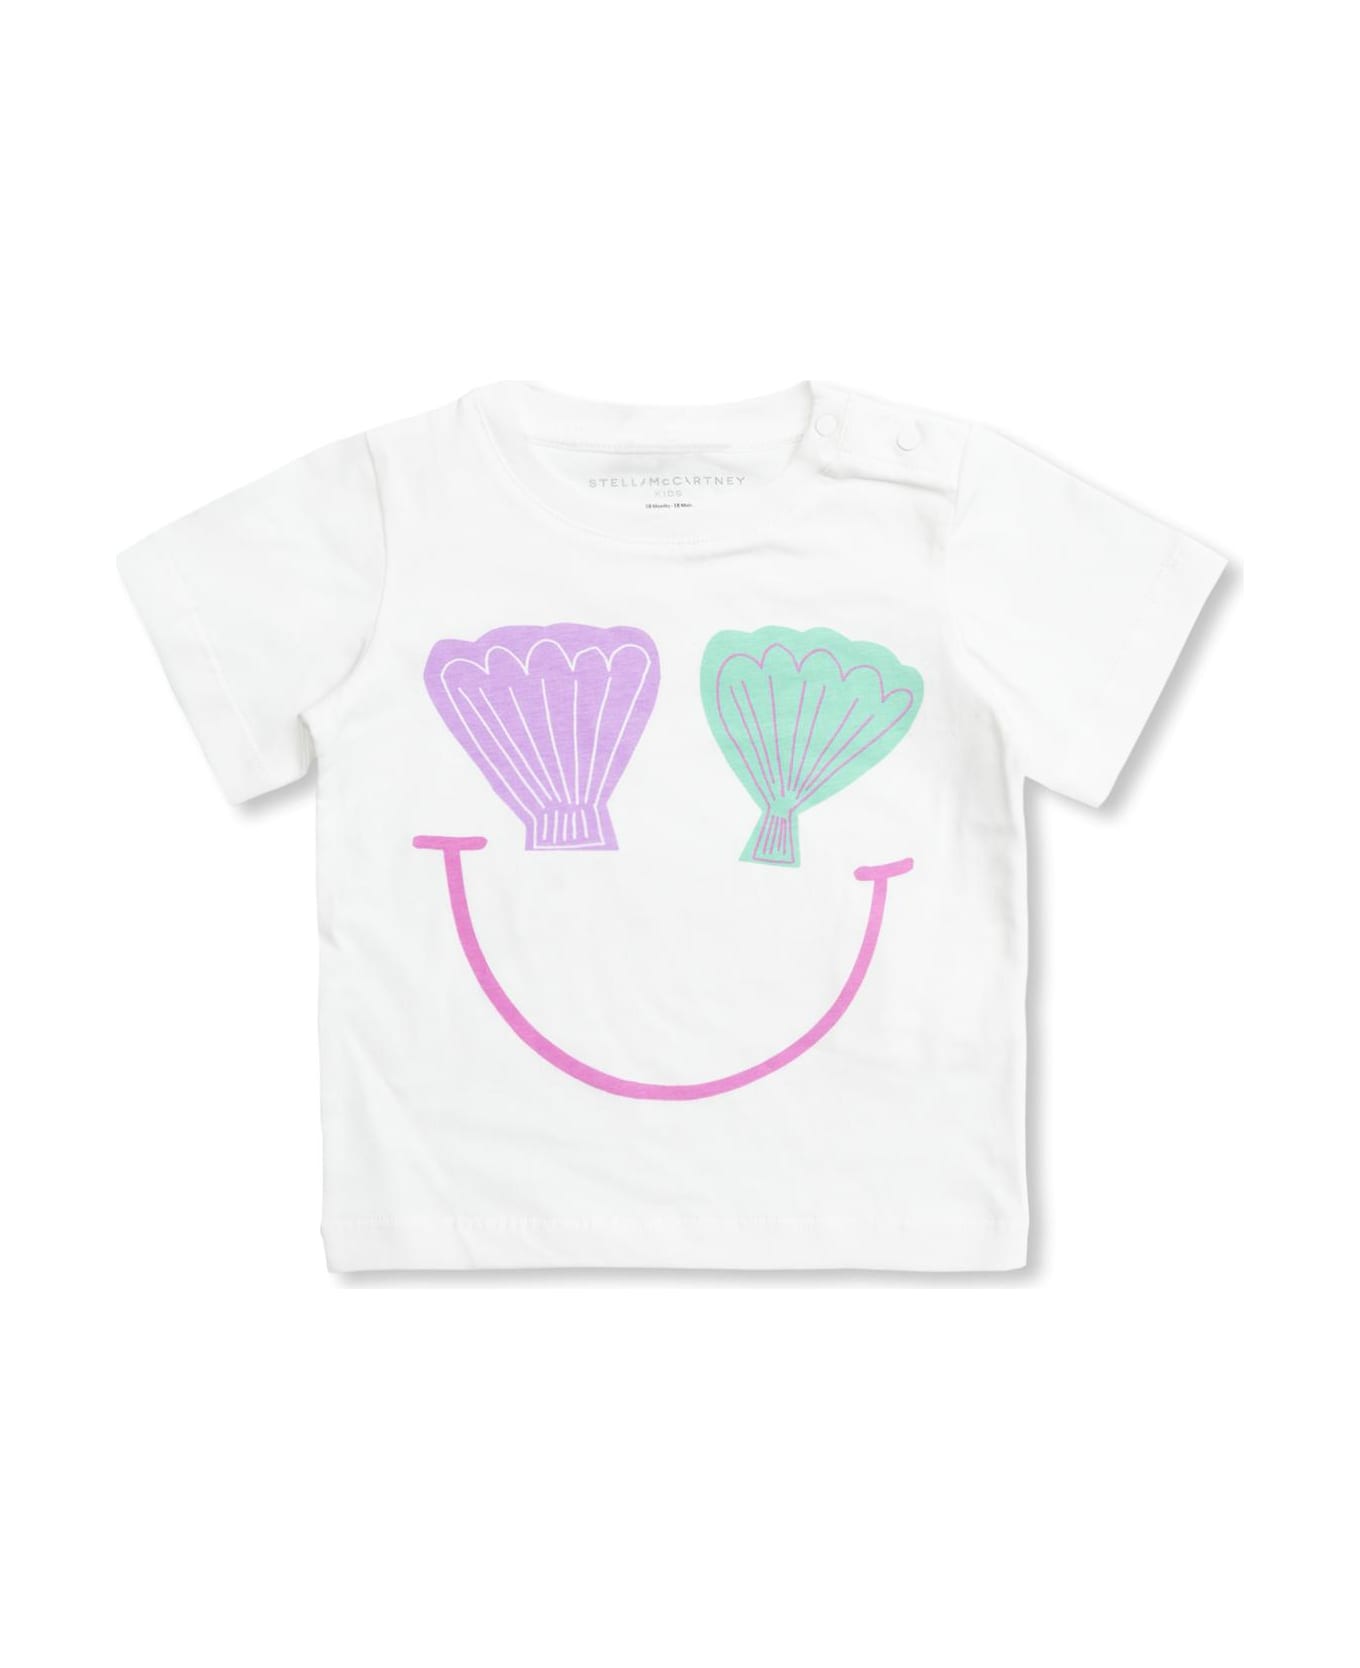 Stella McCartney Kids Printed T-shirt - Avorio